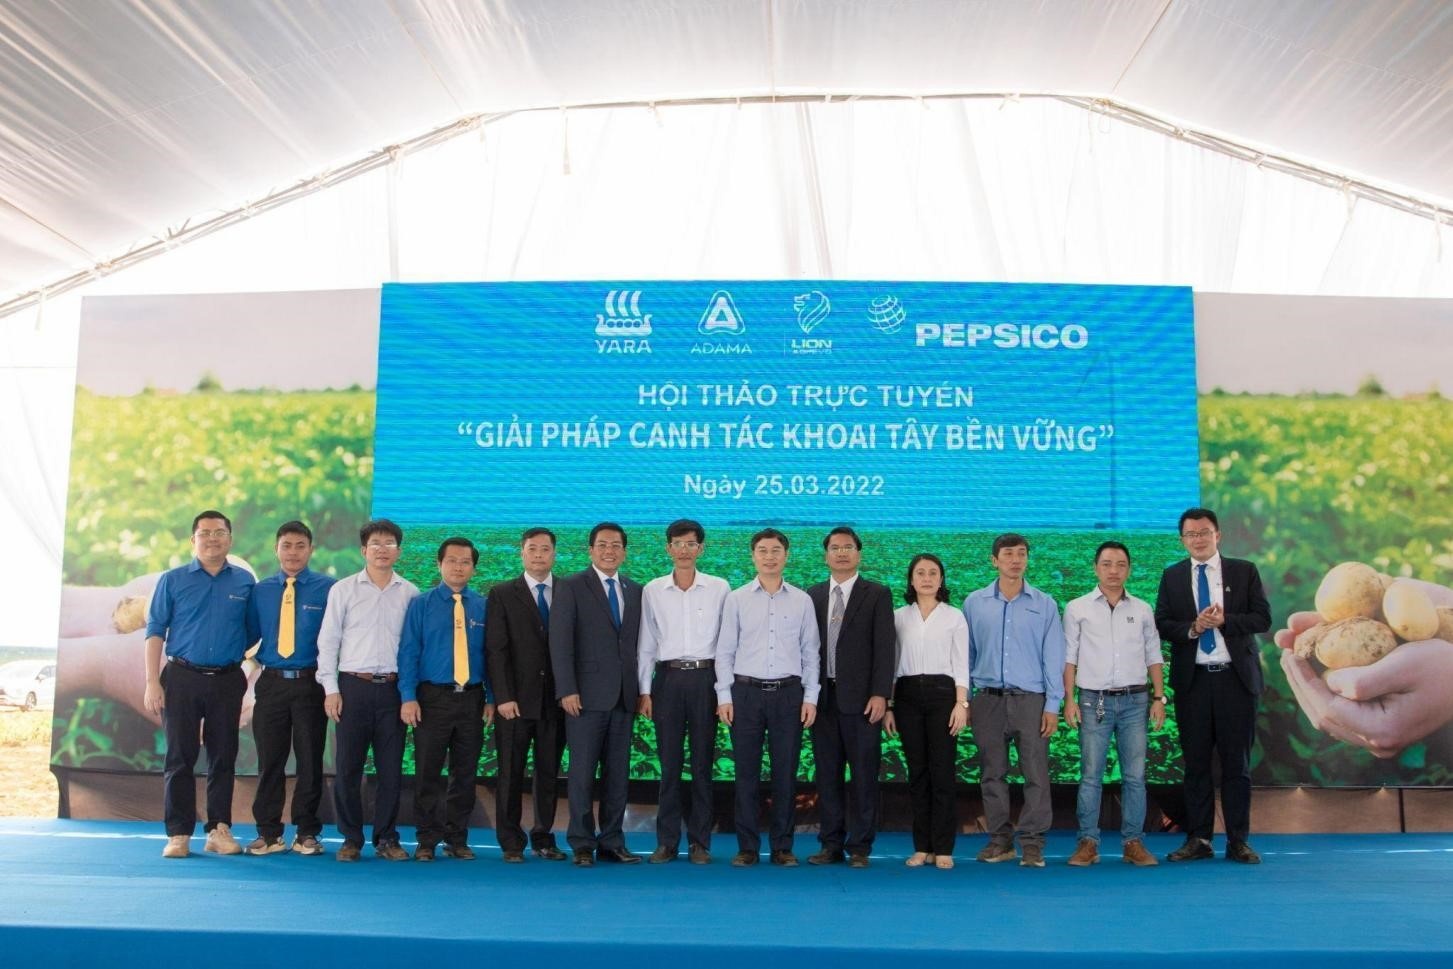 PepsiCo Vietnam strengthens its agriculture in Vietnam